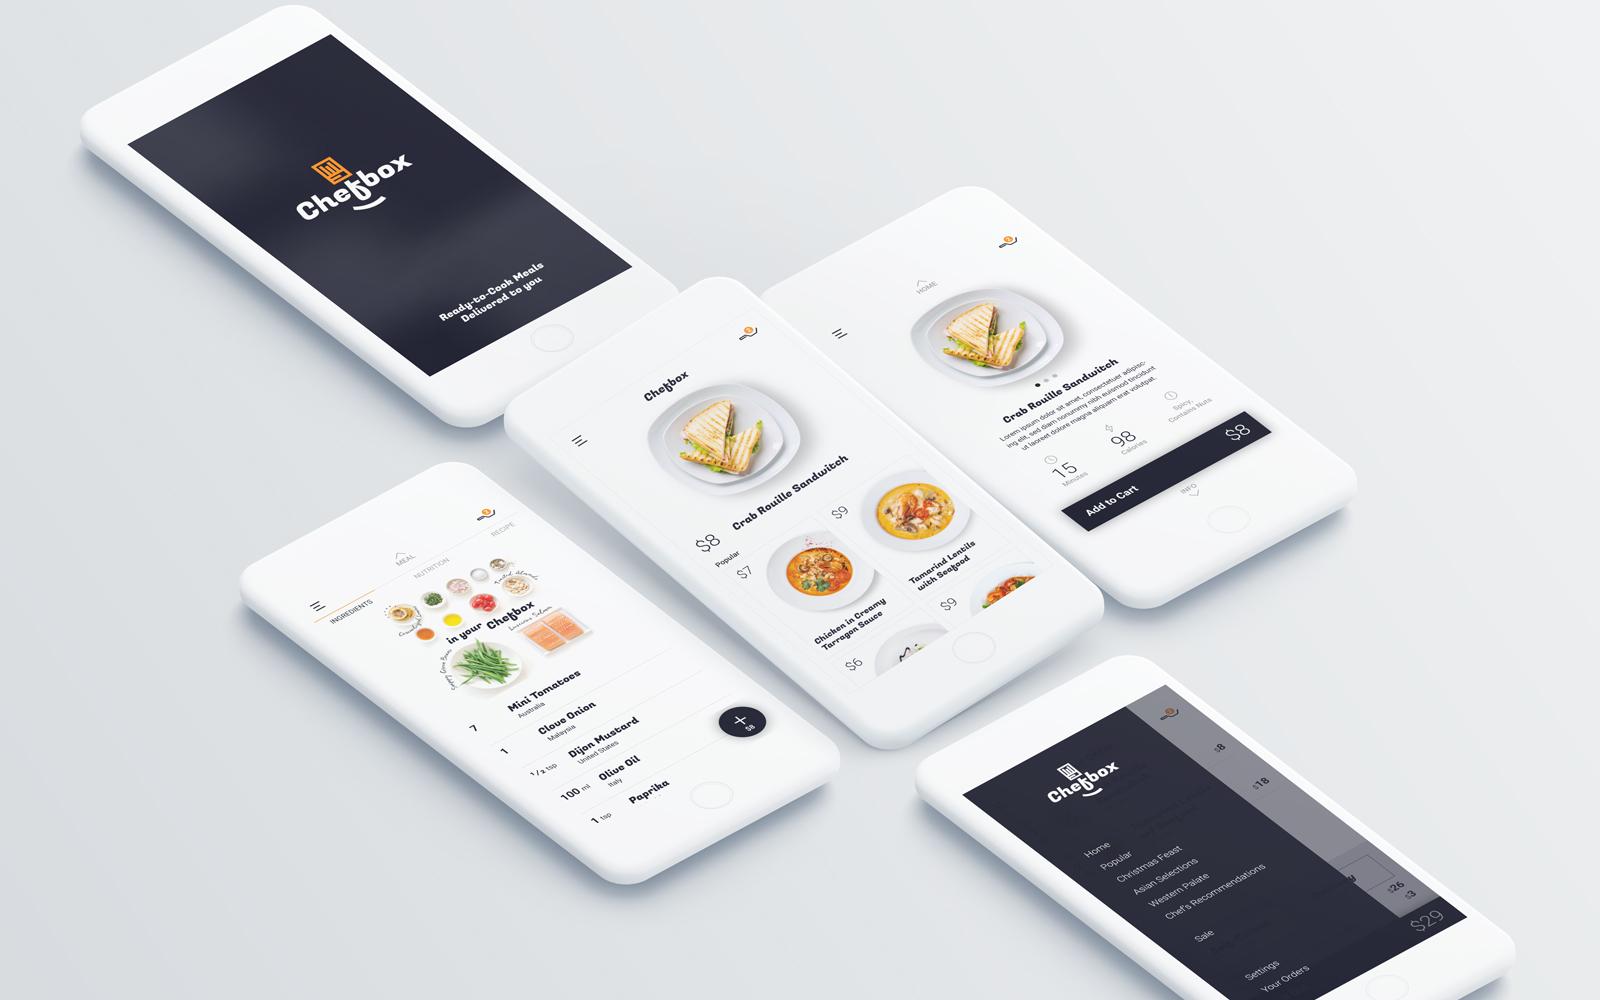 General Mobile App Logo - Chefbox App. Leow Hou Teng. Design & Digital Marketing